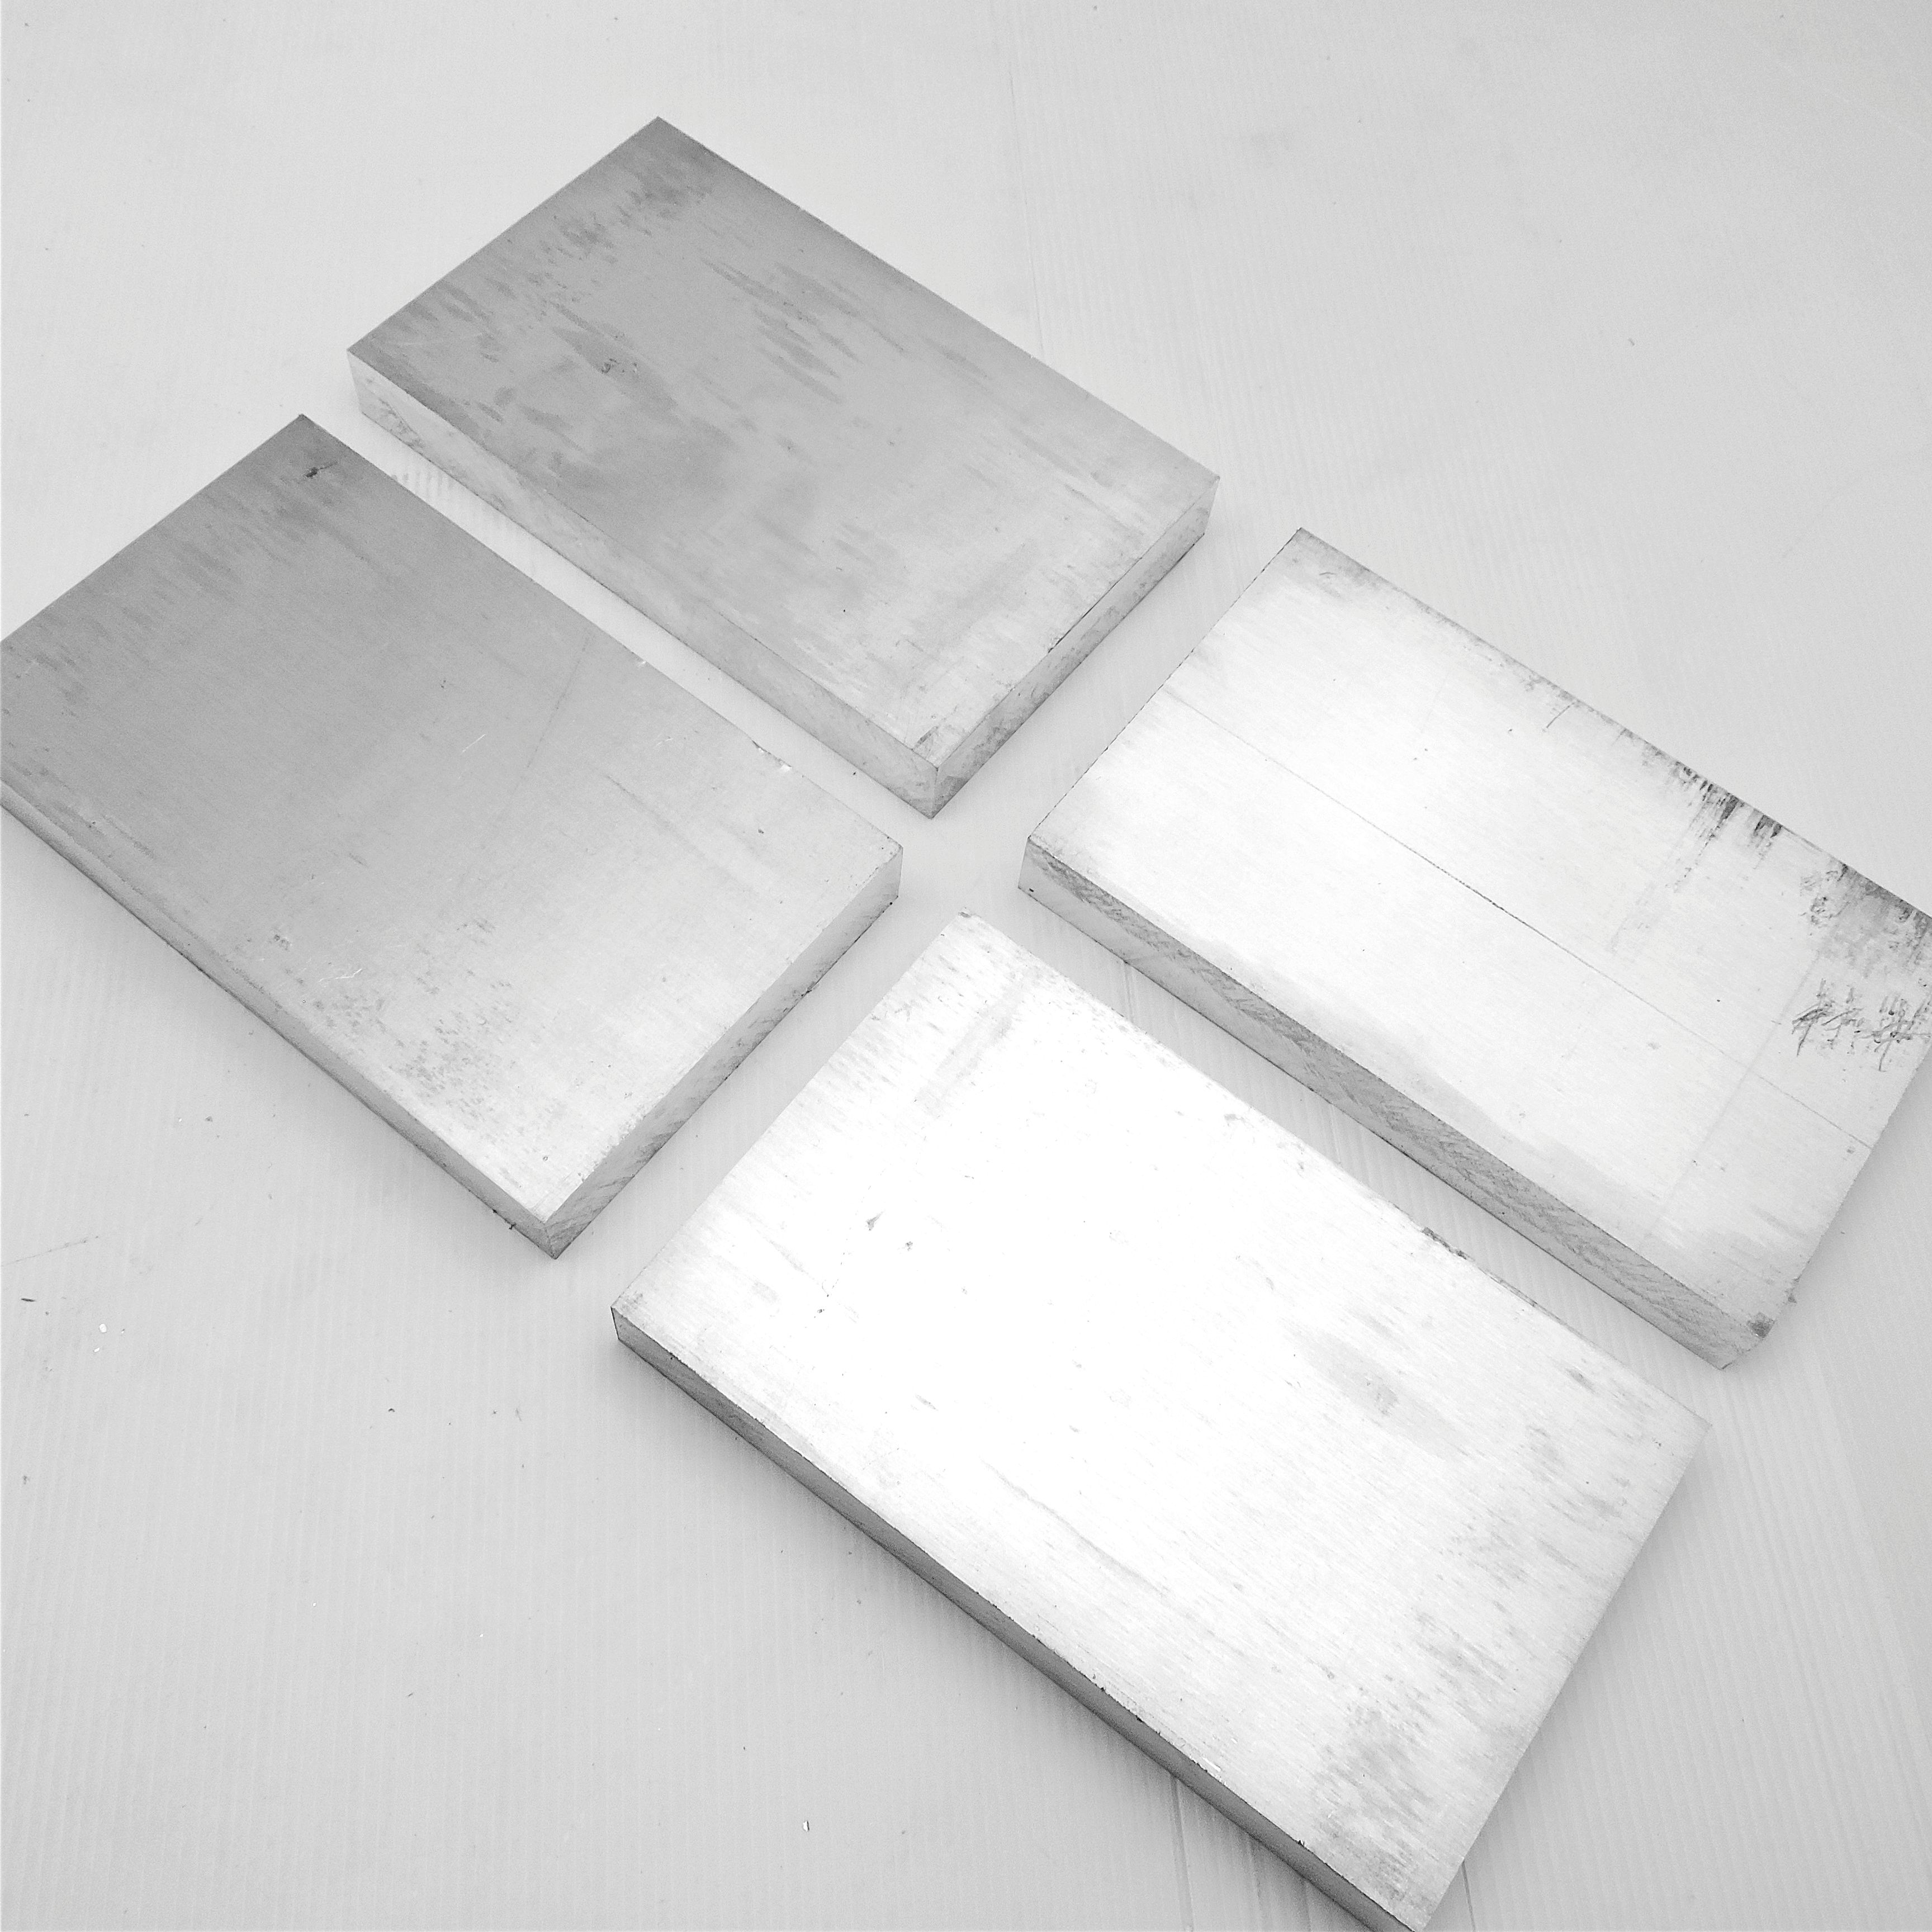 1.25" thick 1 1/4 Aluminum 6061 PLATE 3" x 6.5" Long QTY 4 sku 208050 eBay